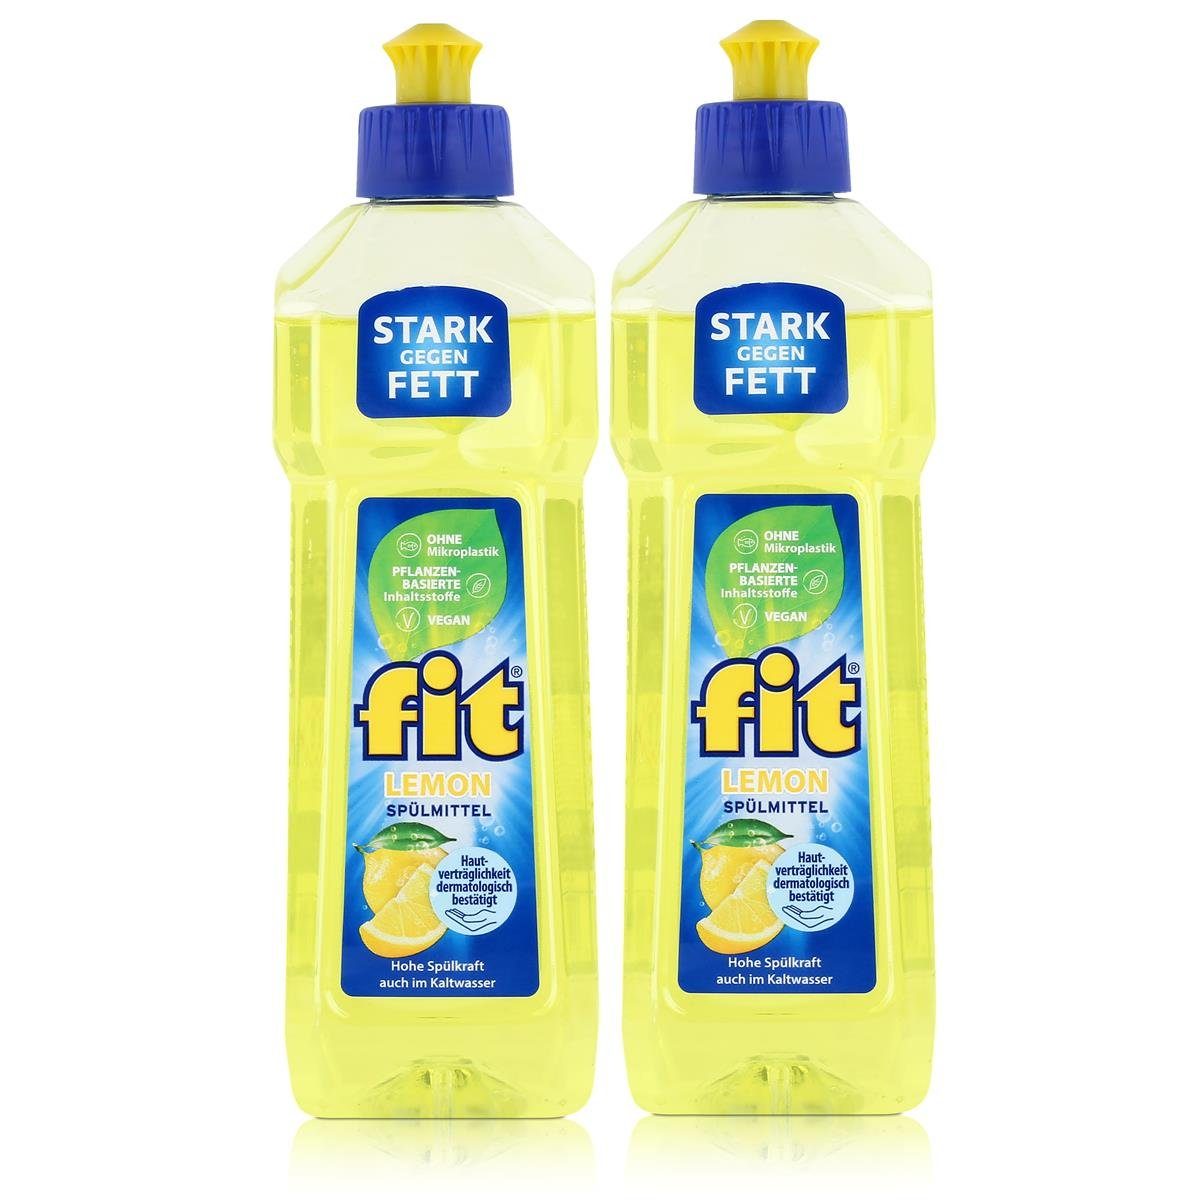 FIT fit Spülmittel Lemon 500ml - Hohe Spülkraft auch im Kaltwasser (2er Pa Geschirrspülmittel